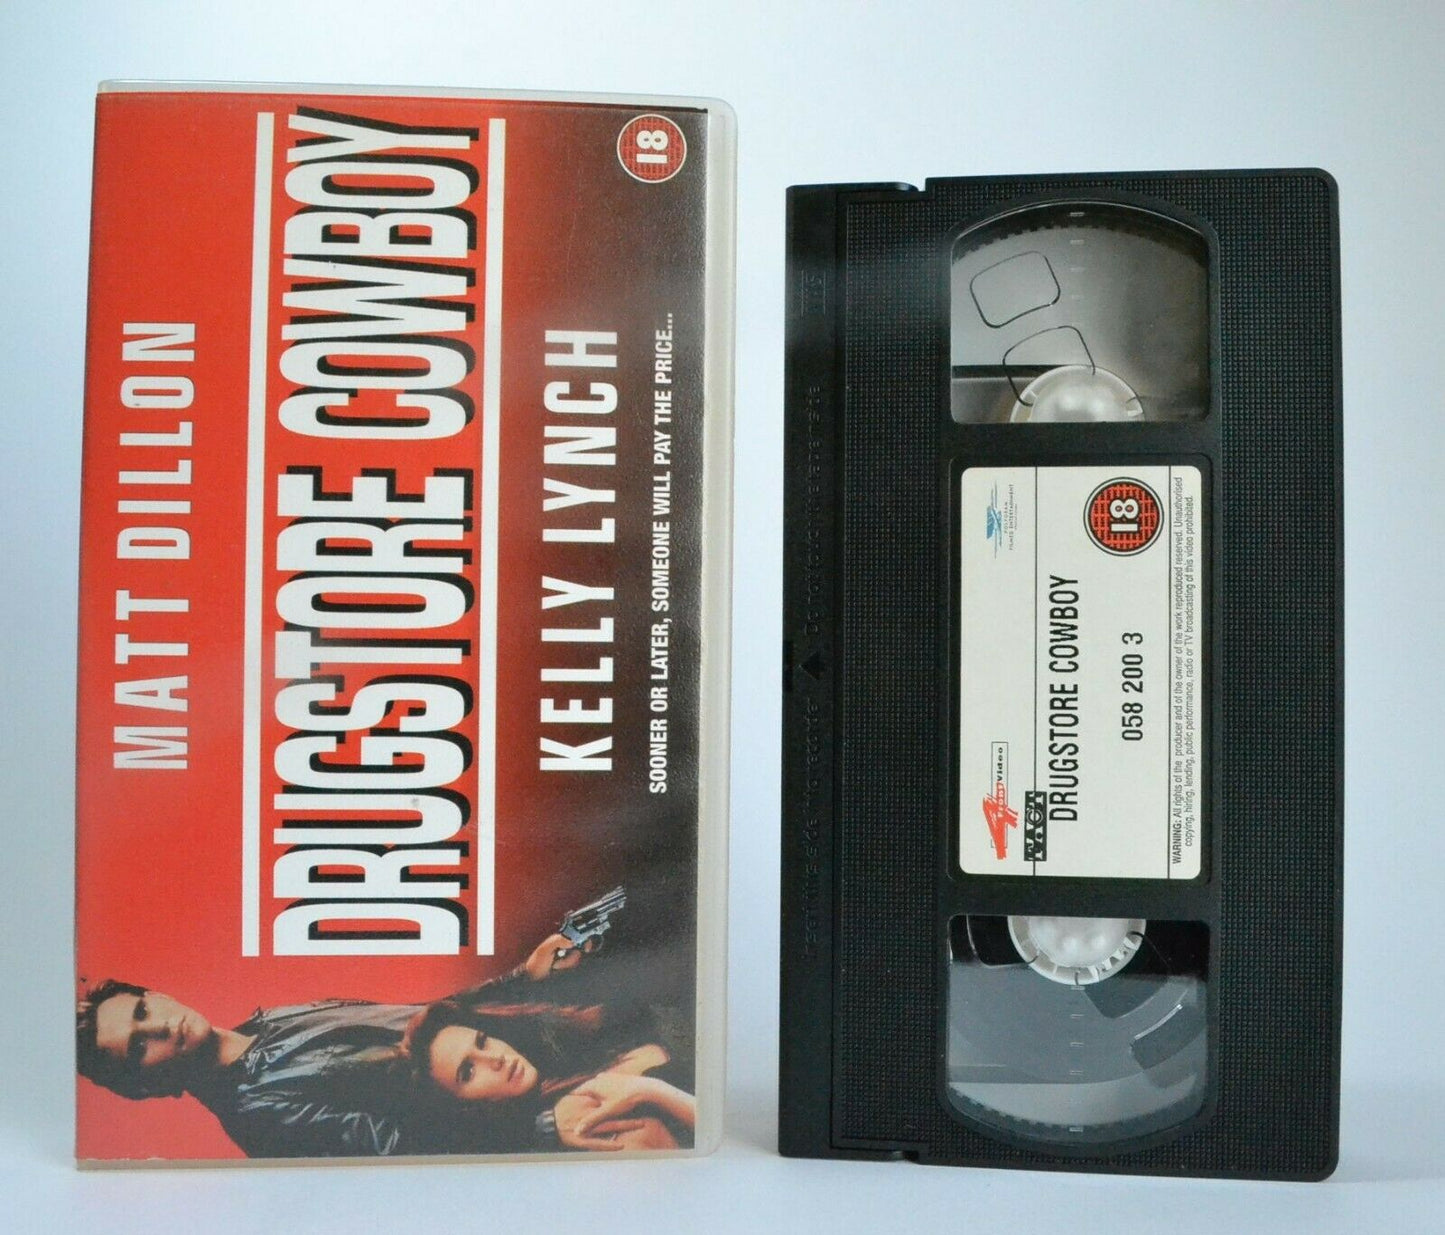 Drugstore Cowboy: A G.Van Sant Crime Drama (1989) - M.Dillon/K.Lynch - Pal VHS-